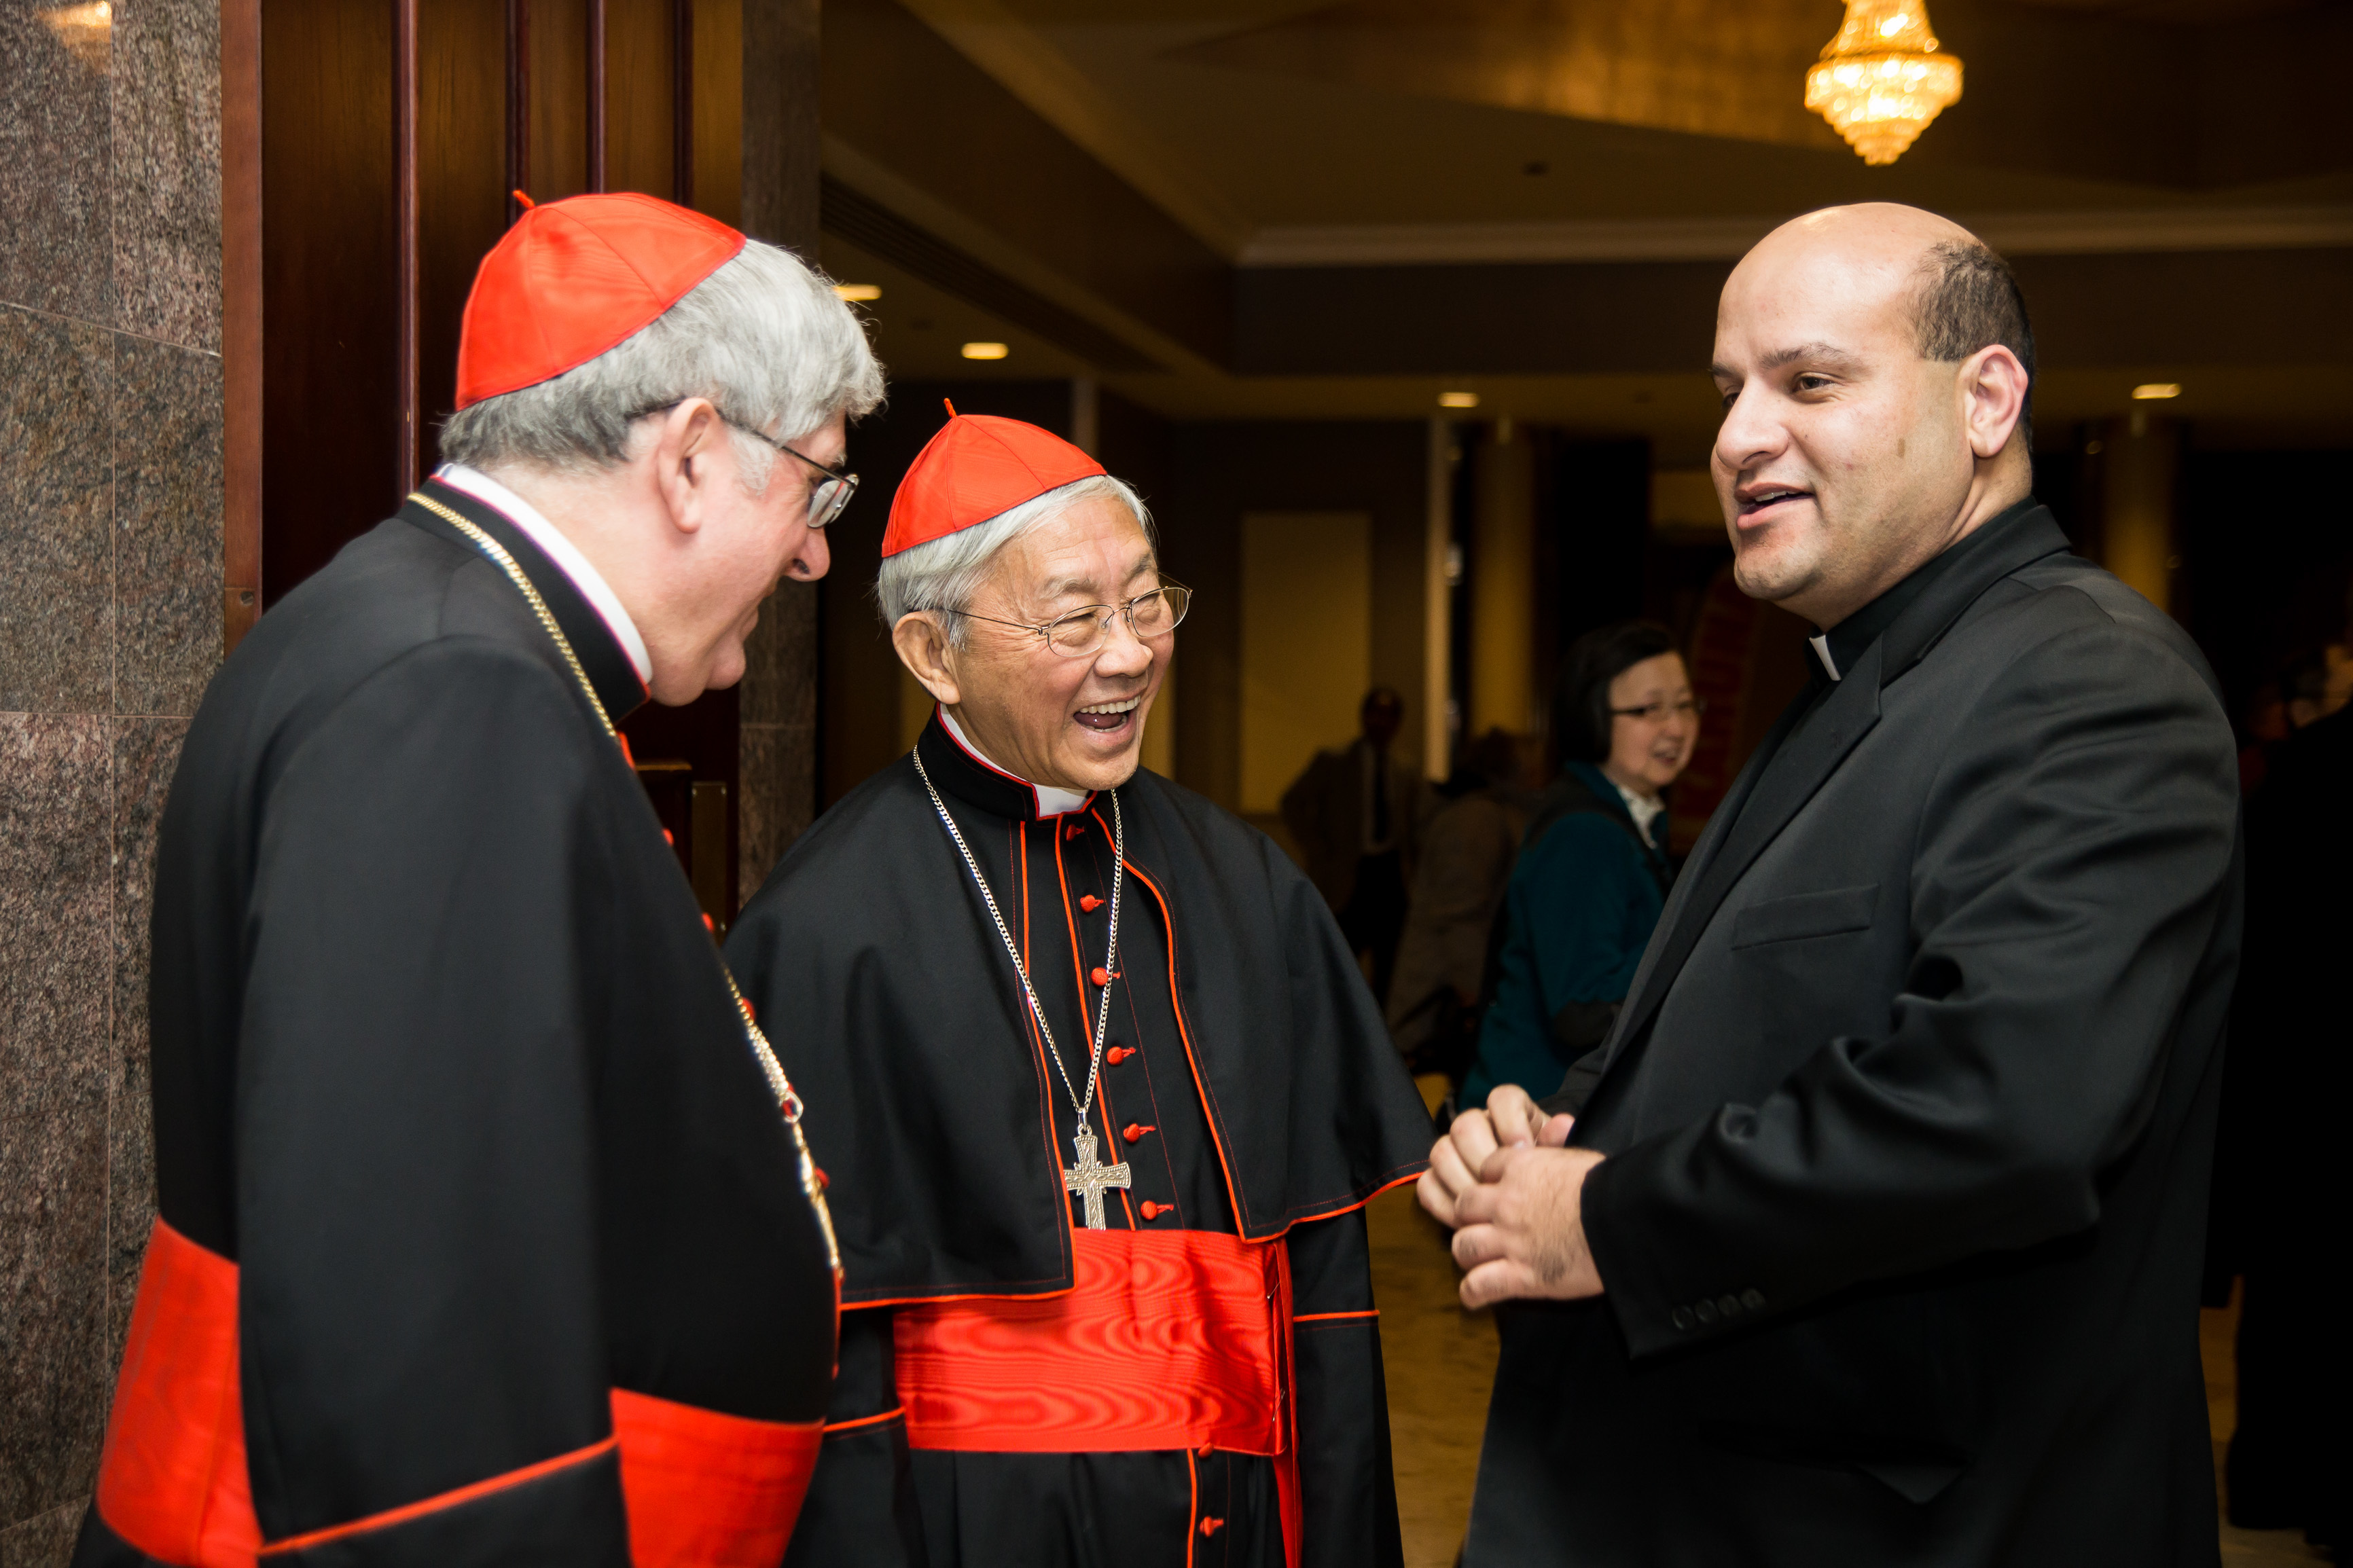 Convivium Welcomes China's Cardinal Zen